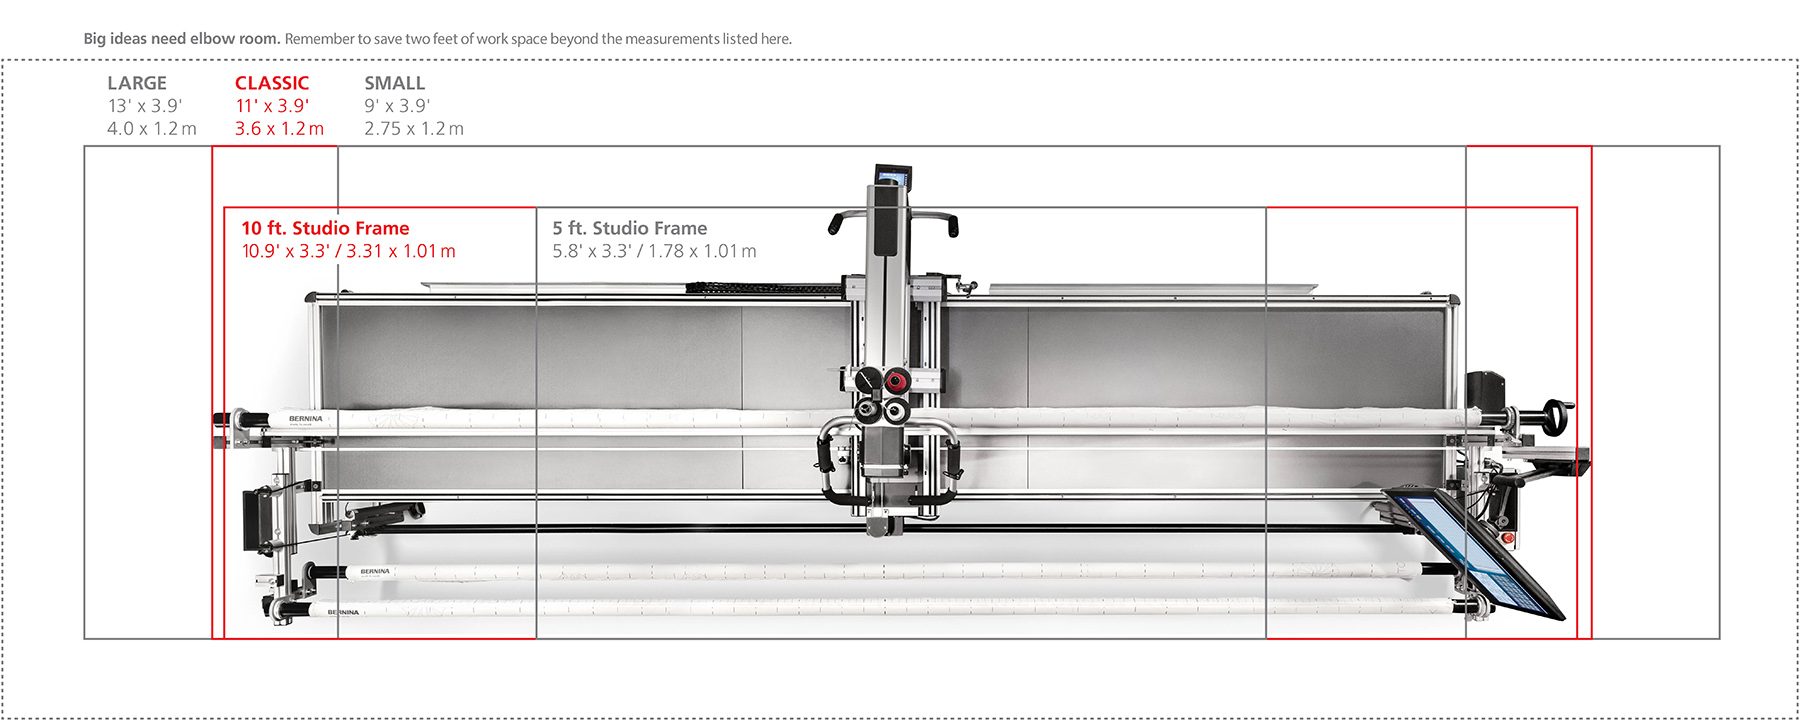 BERNINA Floorplan for Longarm-Machine Frames